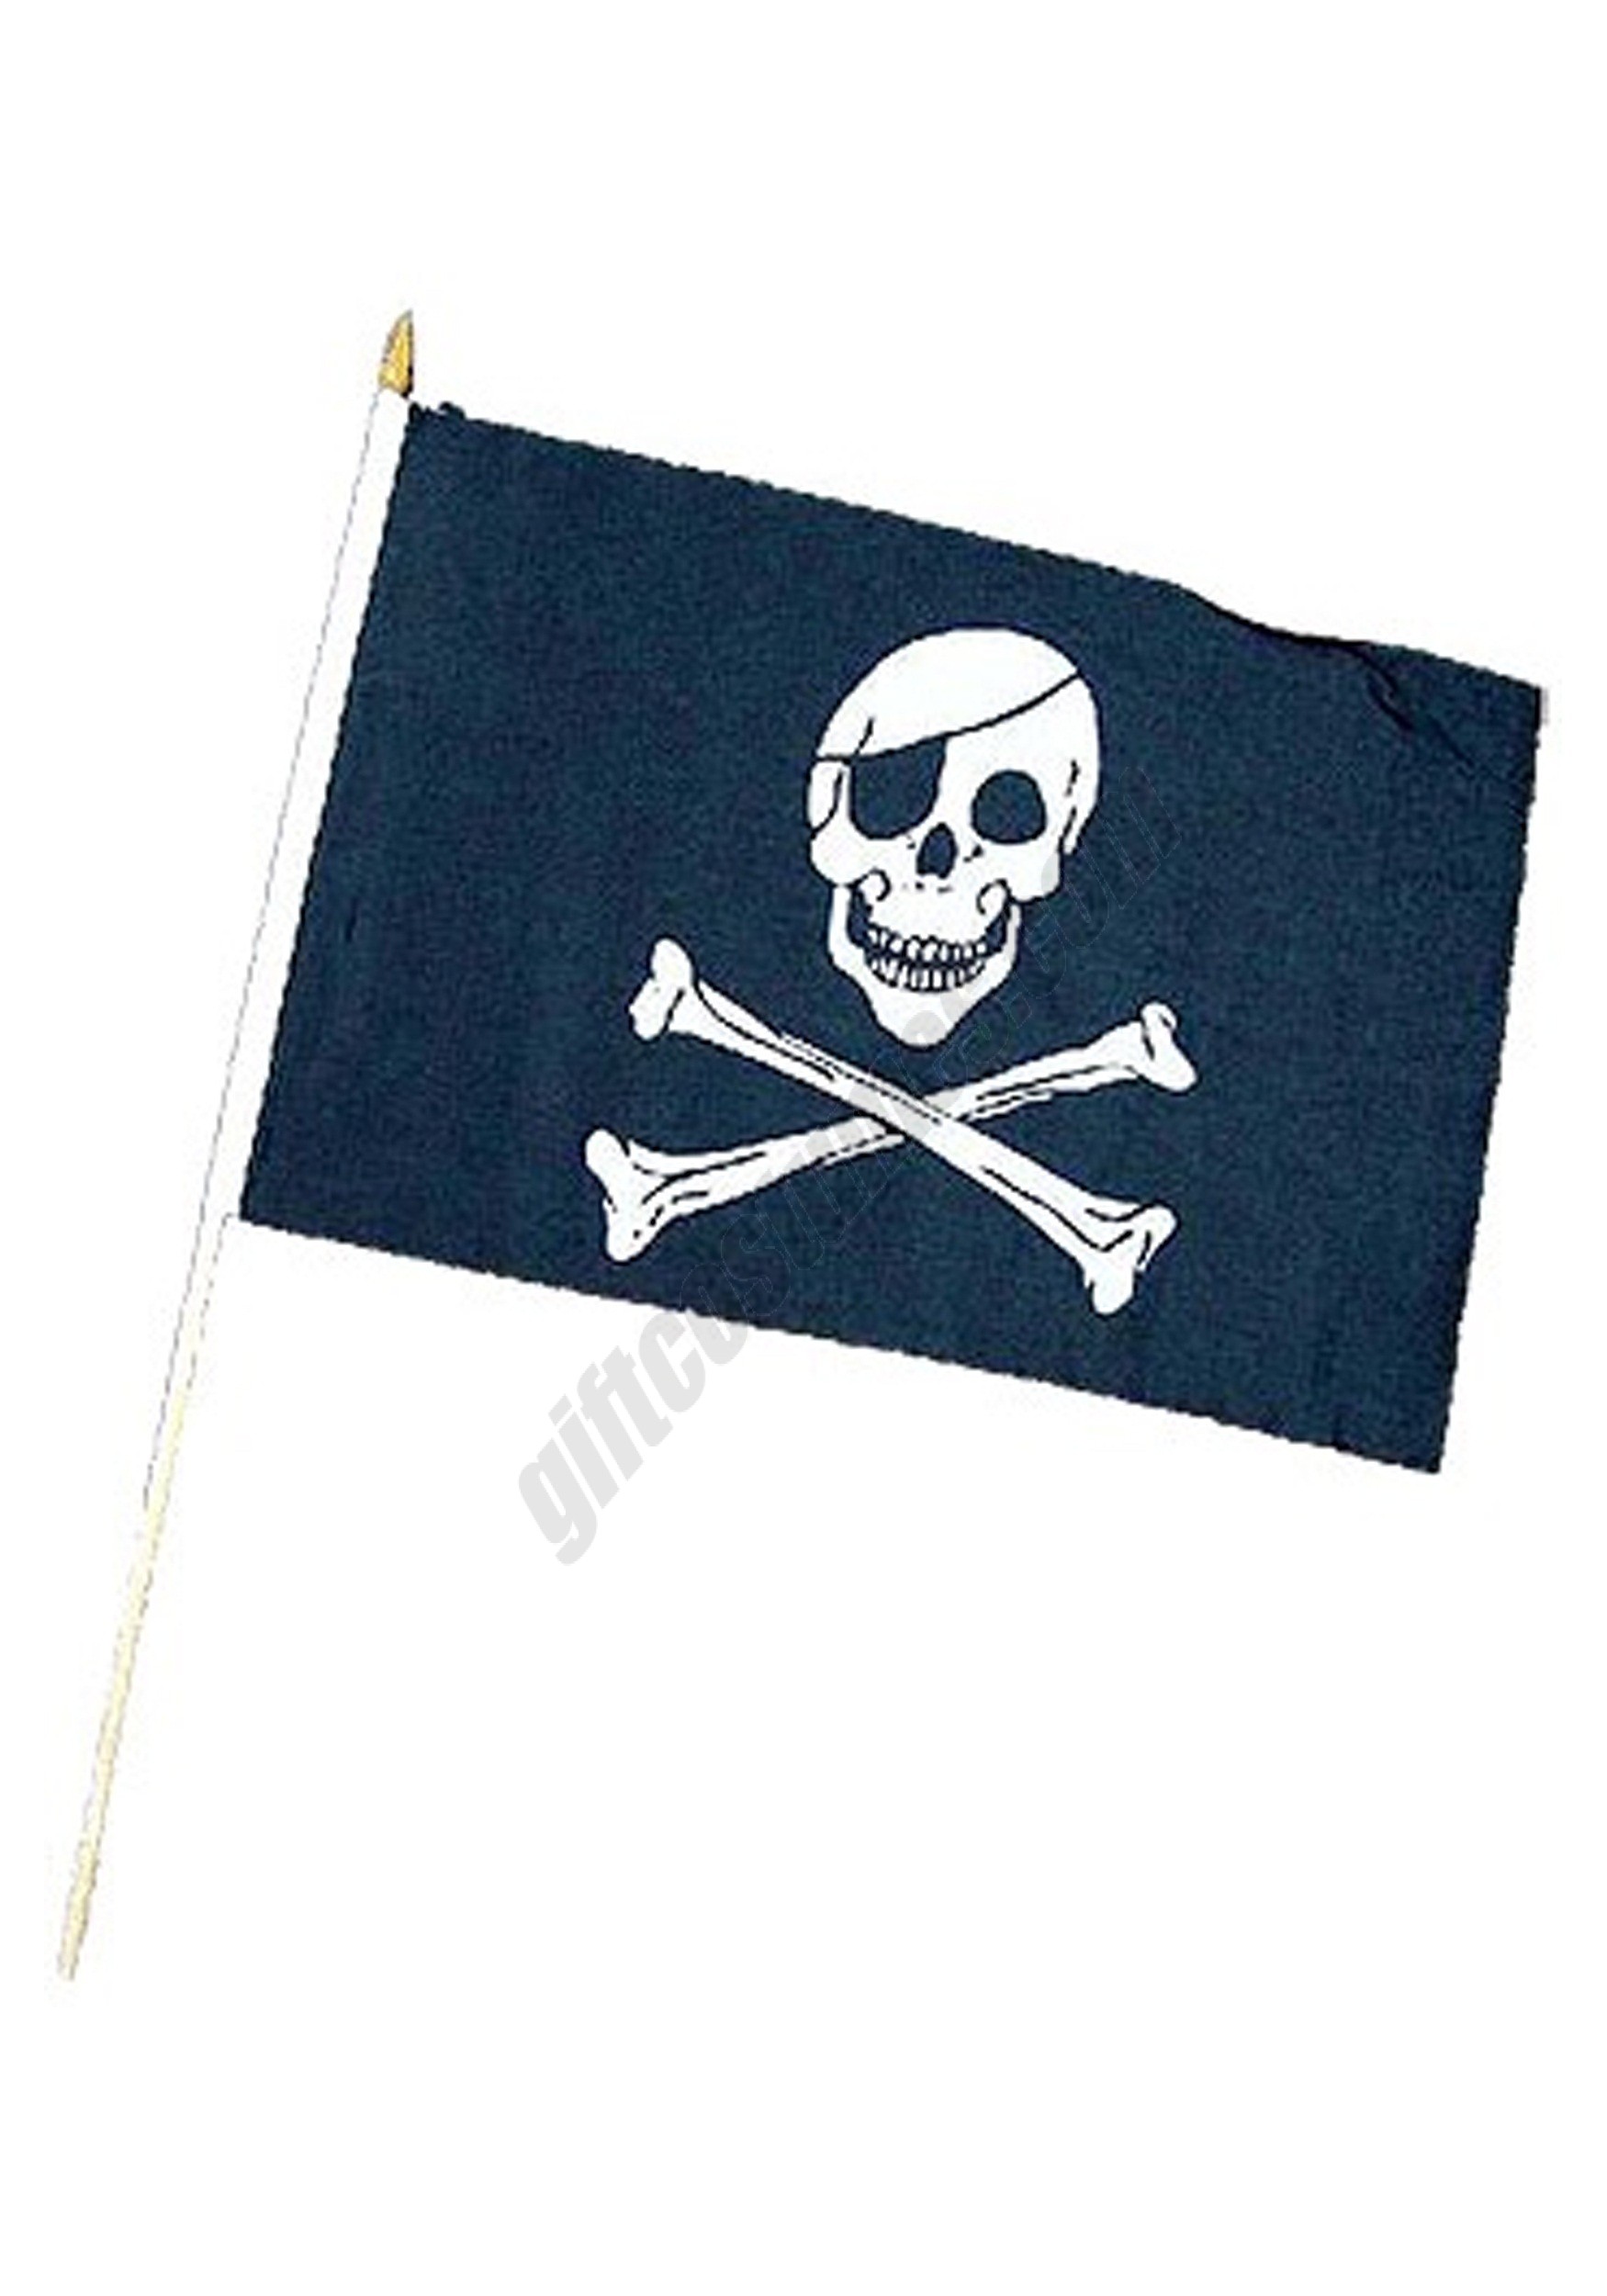 Skull & Crossbones Pirate Flag Promotions - Skull & Crossbones Pirate Flag Promotions